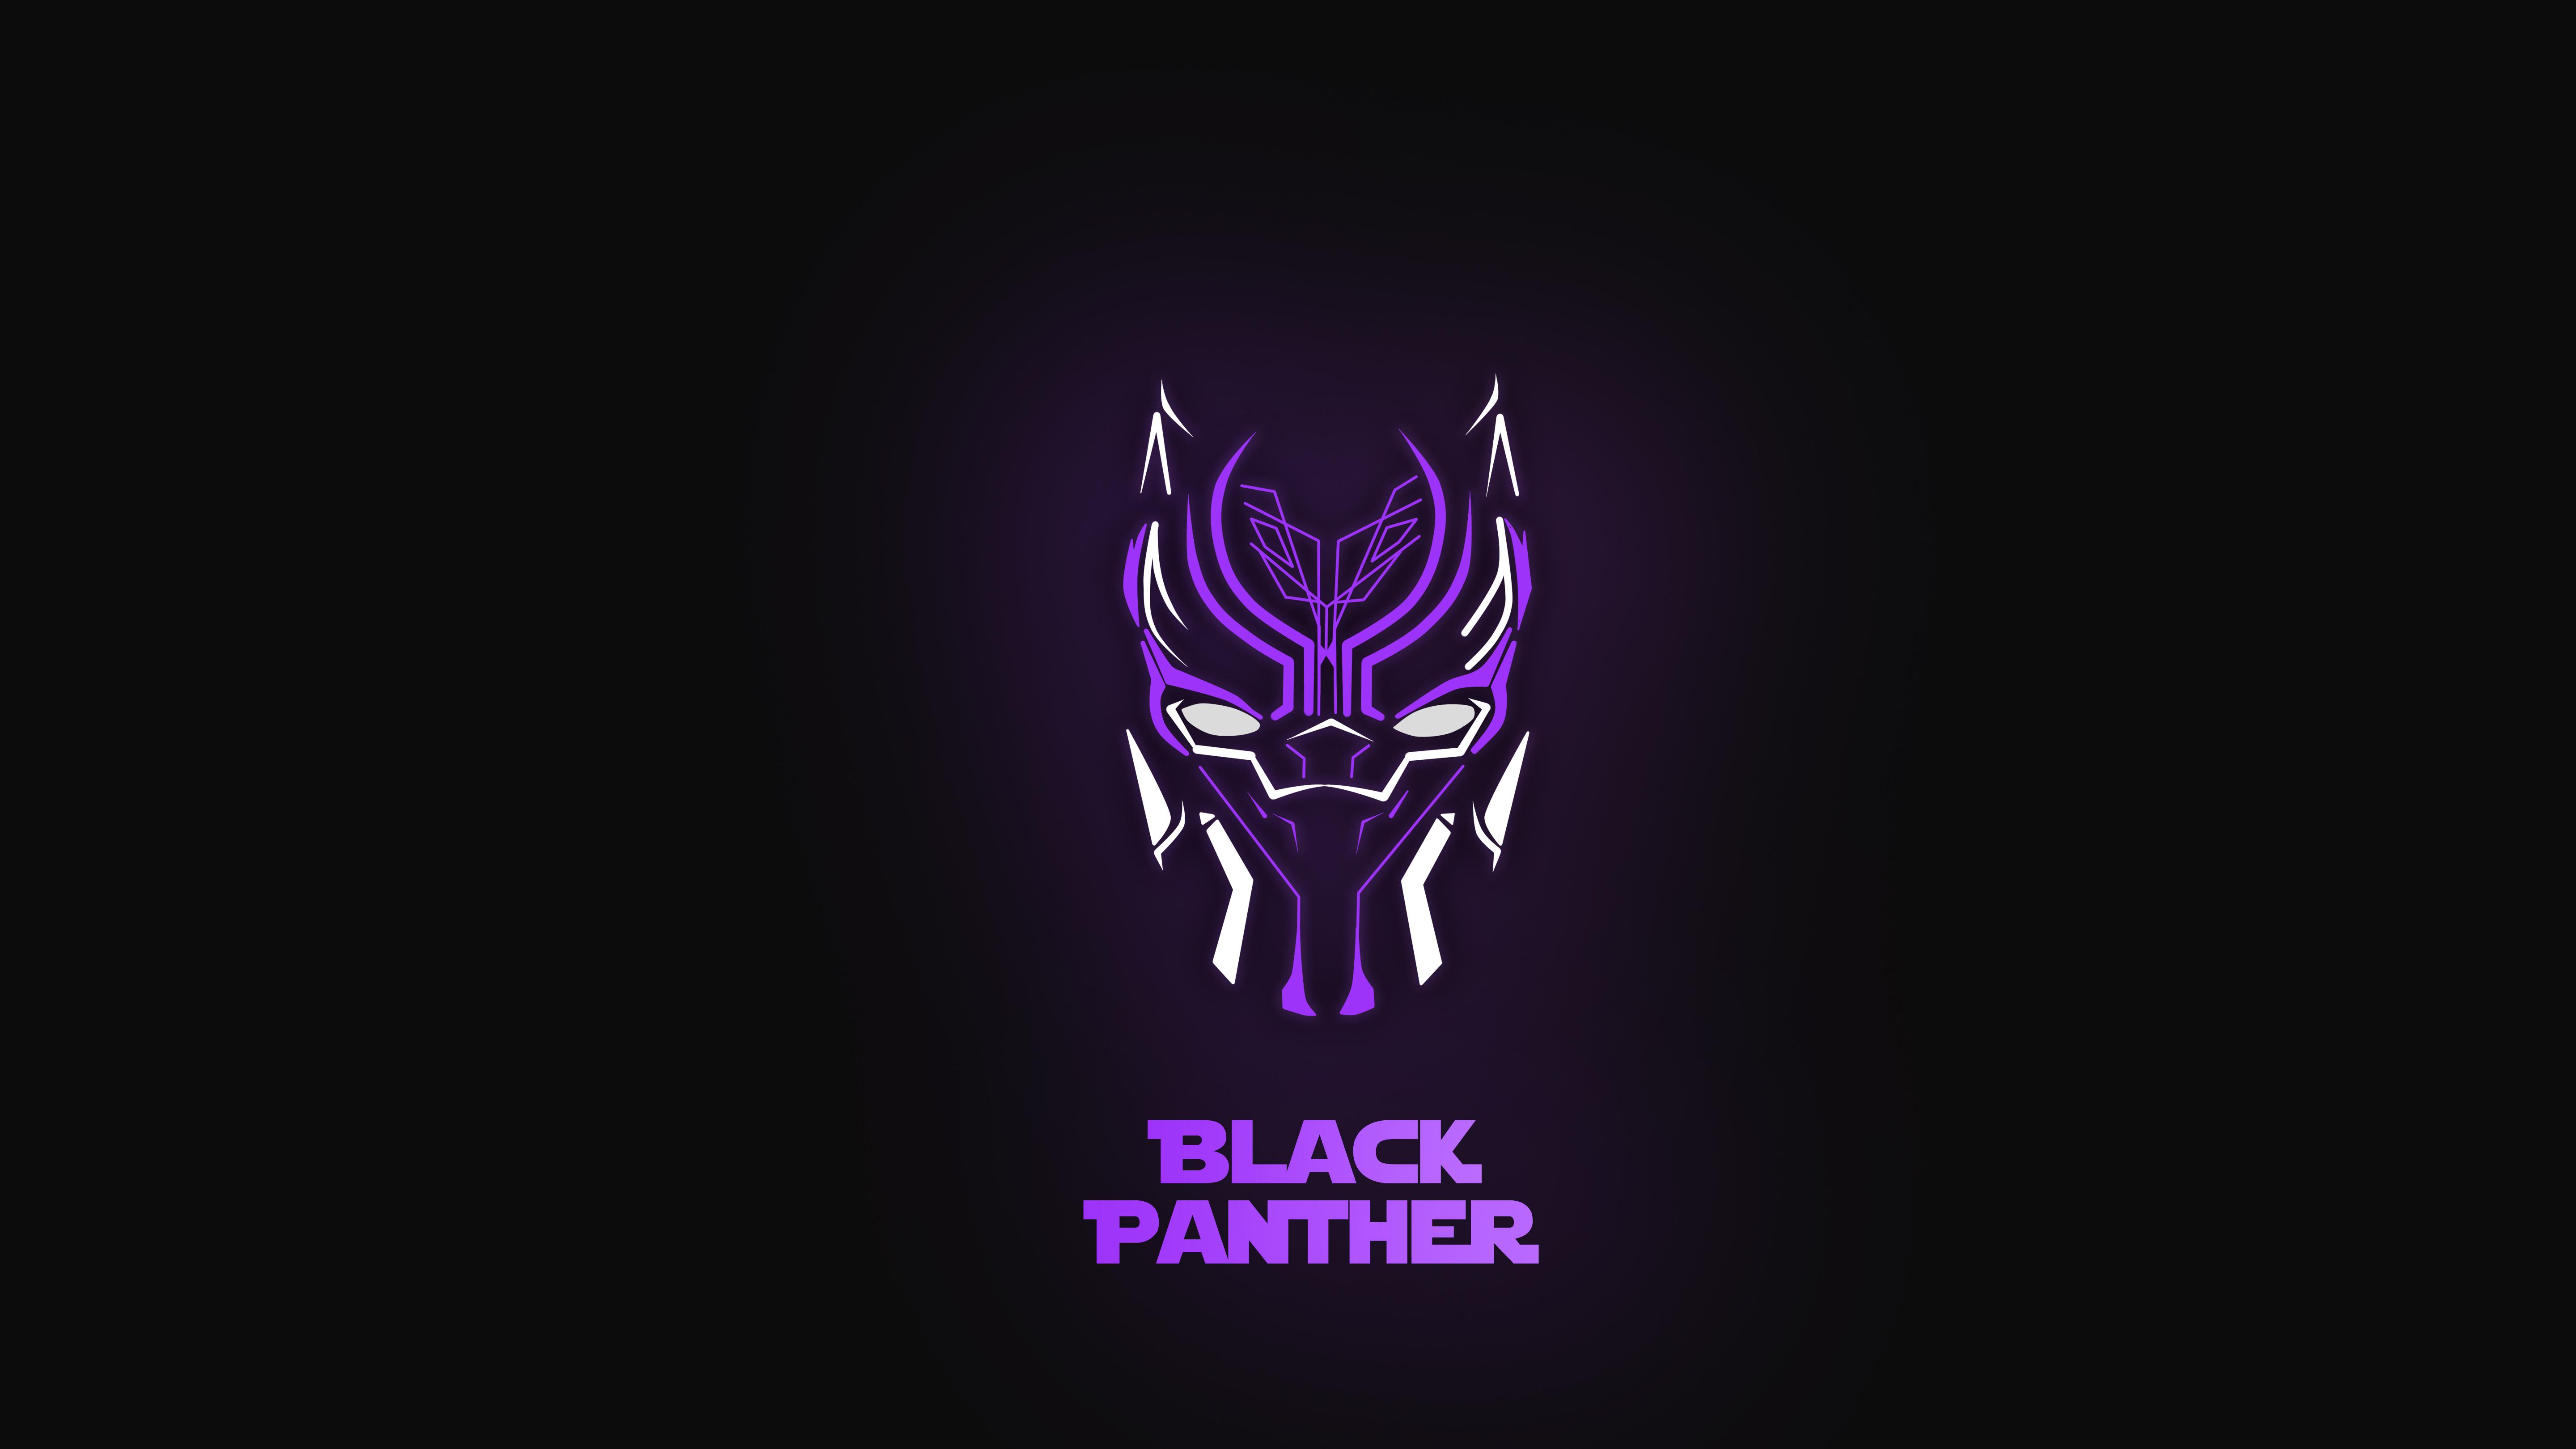 Black Panther Neon 5k, HD Superheroes, 4k Wallpaper, Image